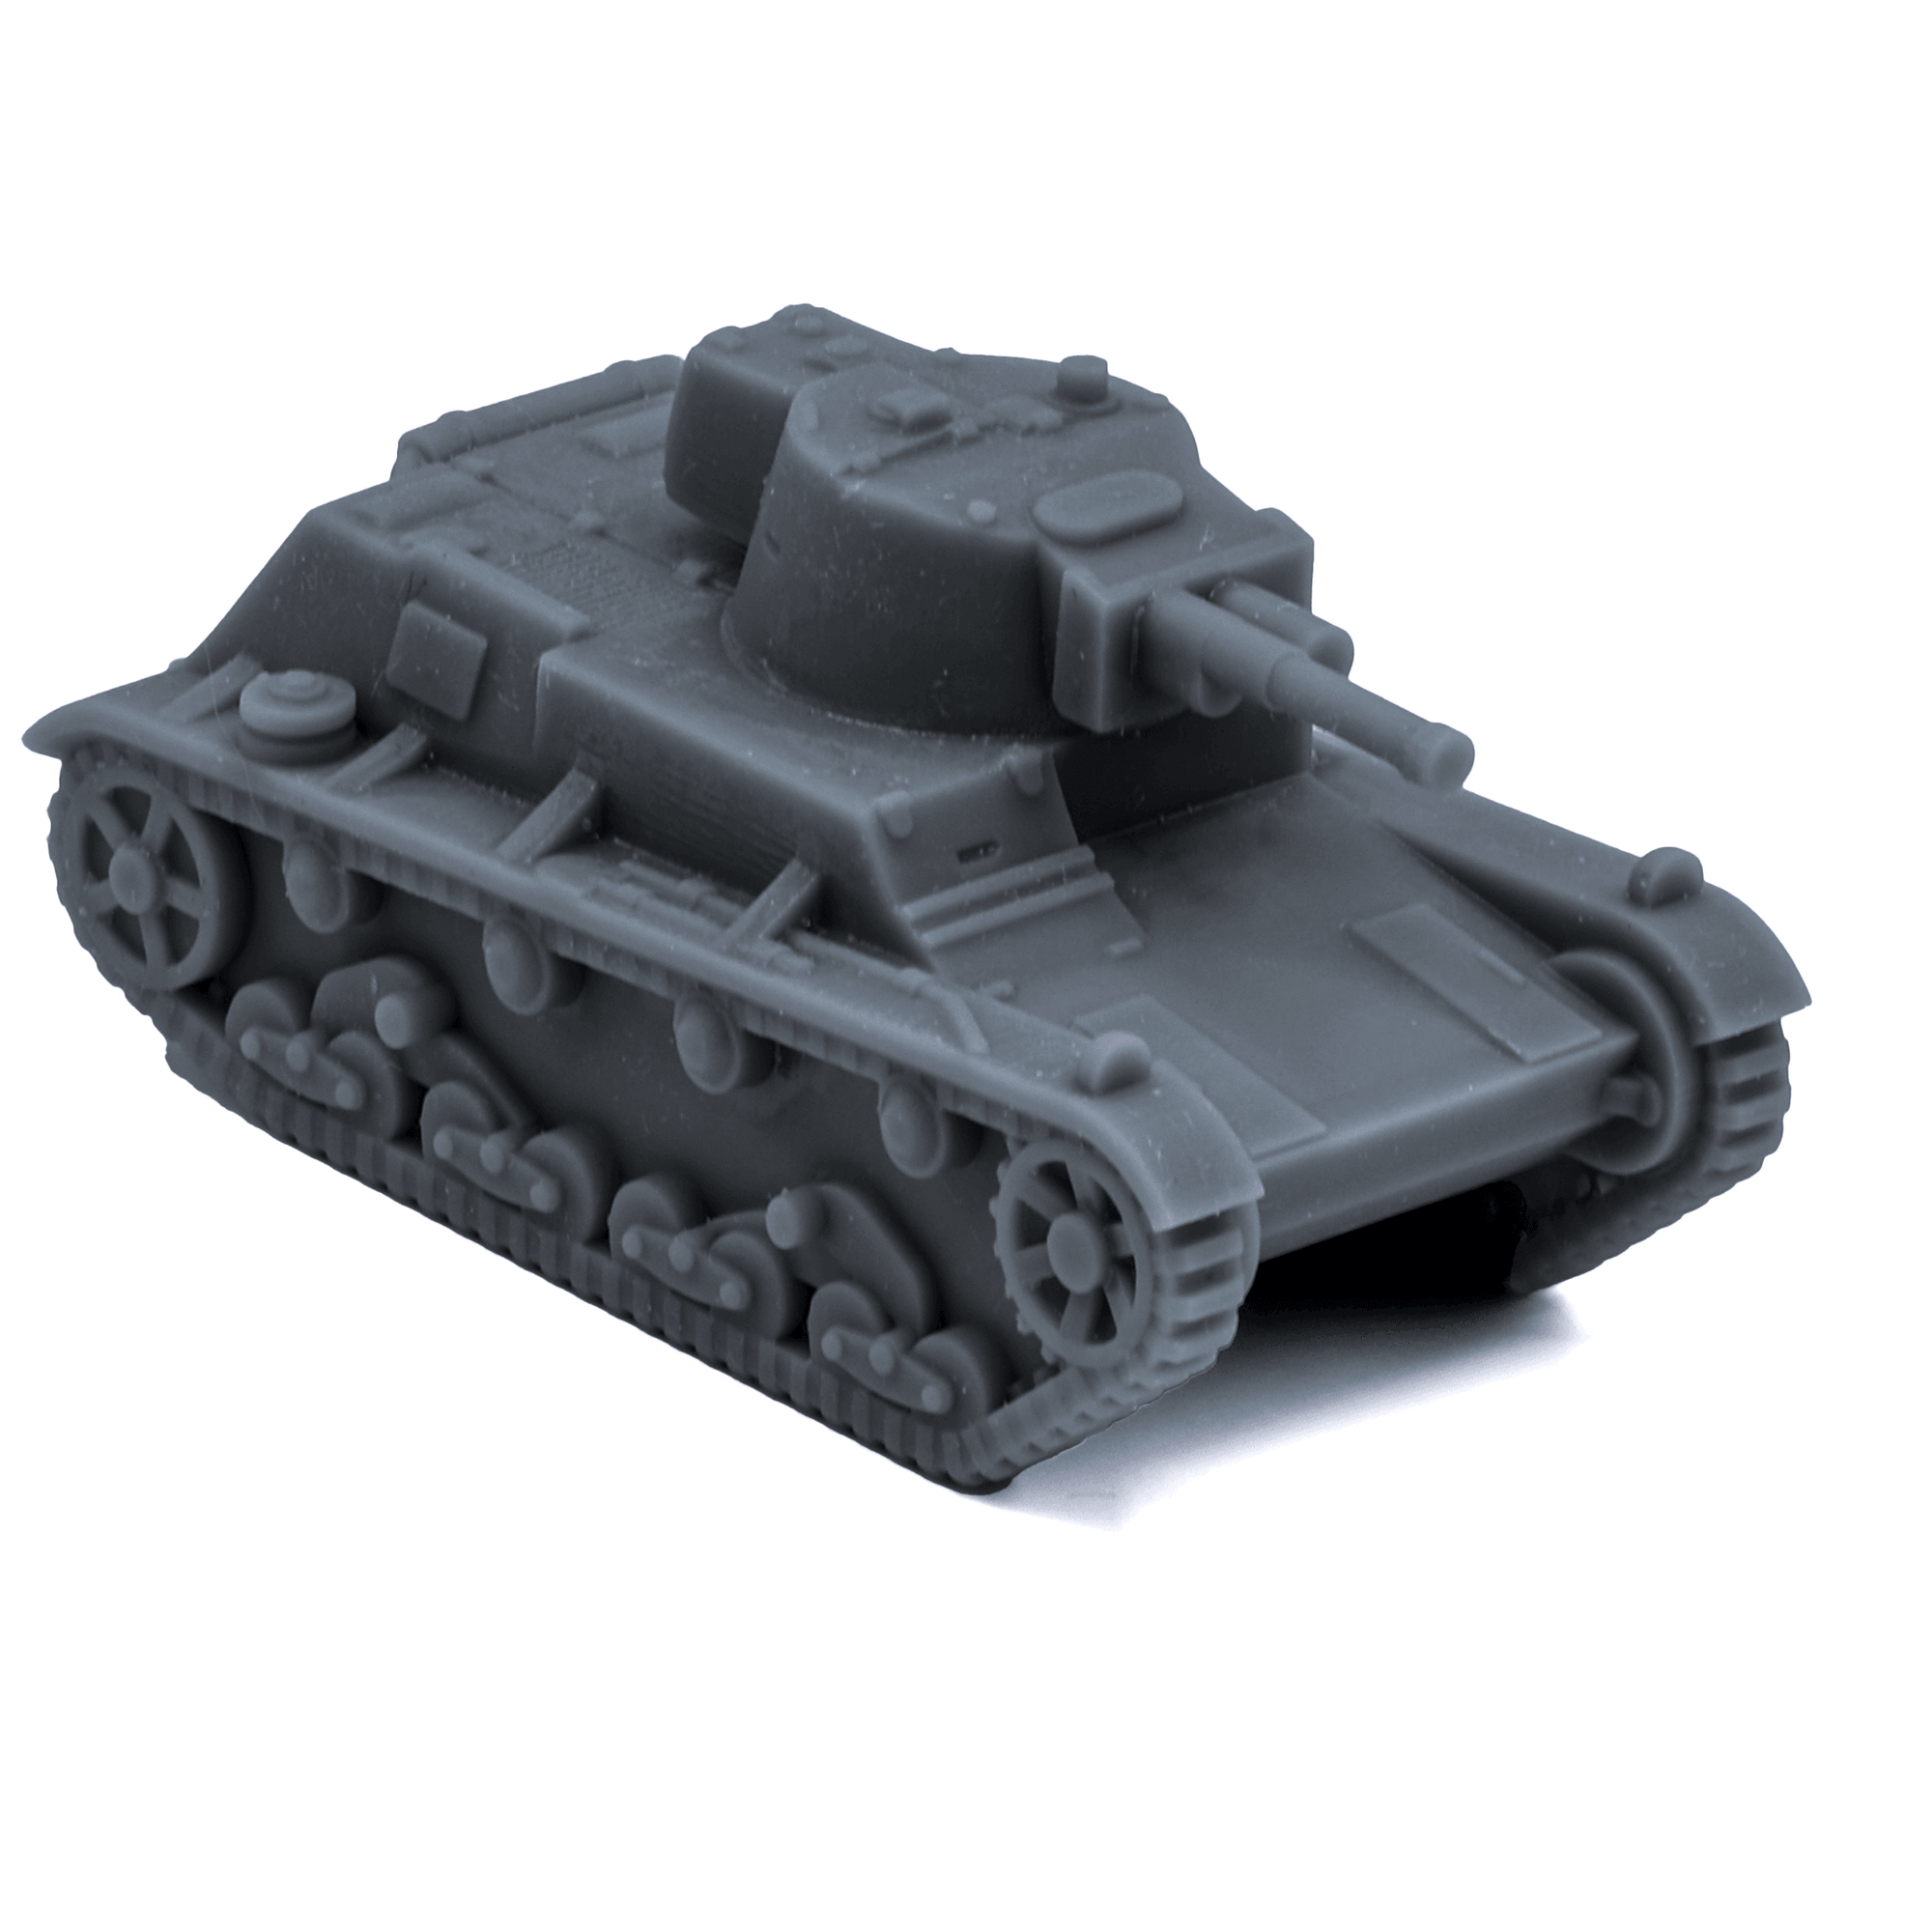 7TP Polish Tank - Alternate Ending Games